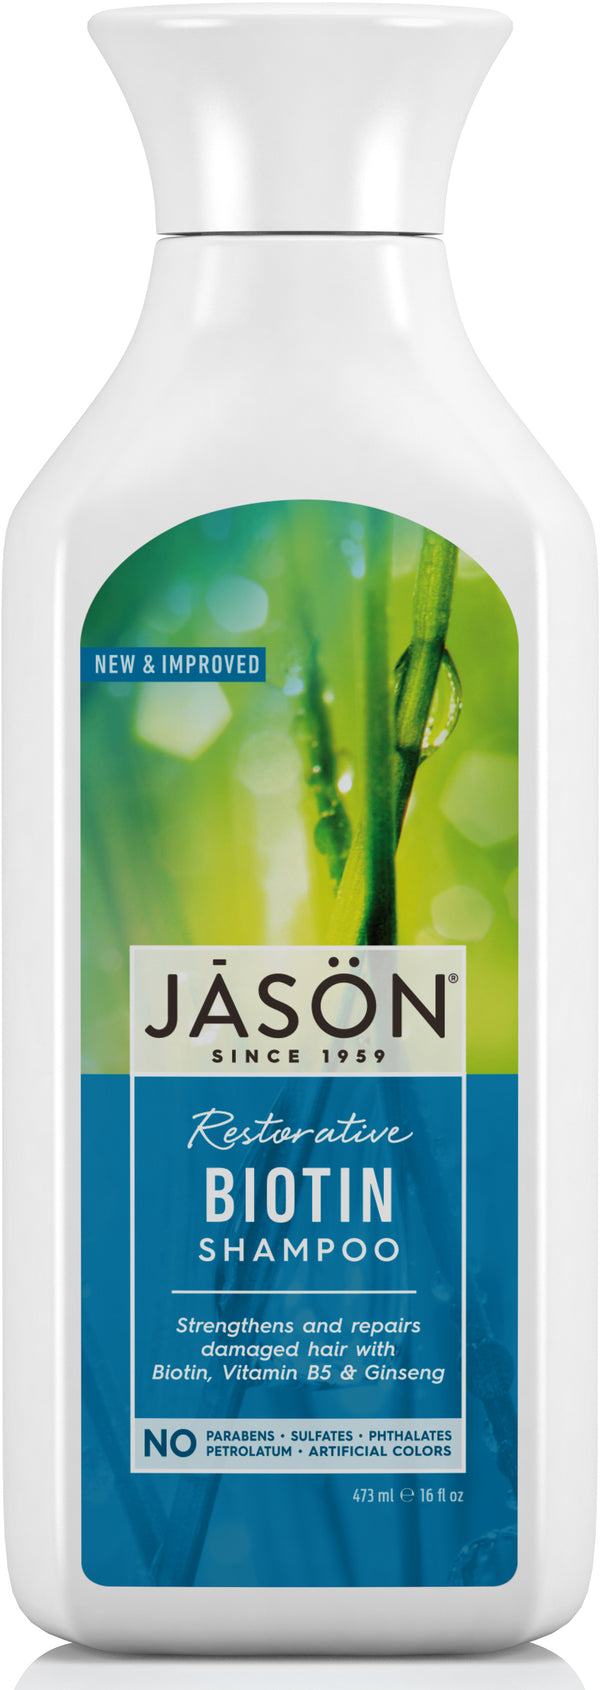 JASON Restorative Biotin Shampoo